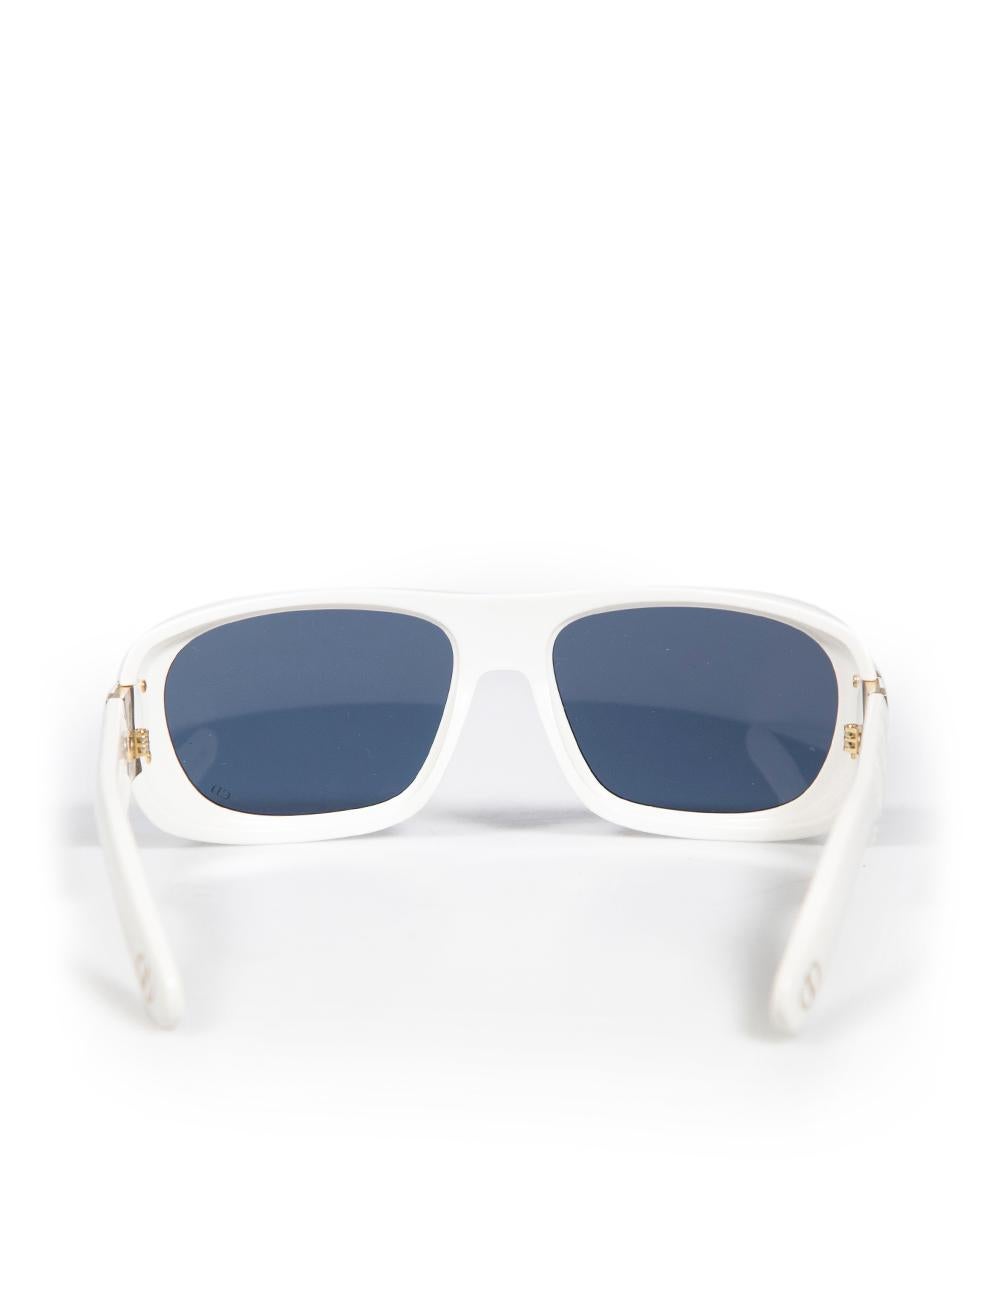 Dior White Lady 9522 S1I Square Sunglasses In Good Condition For Sale In London, GB